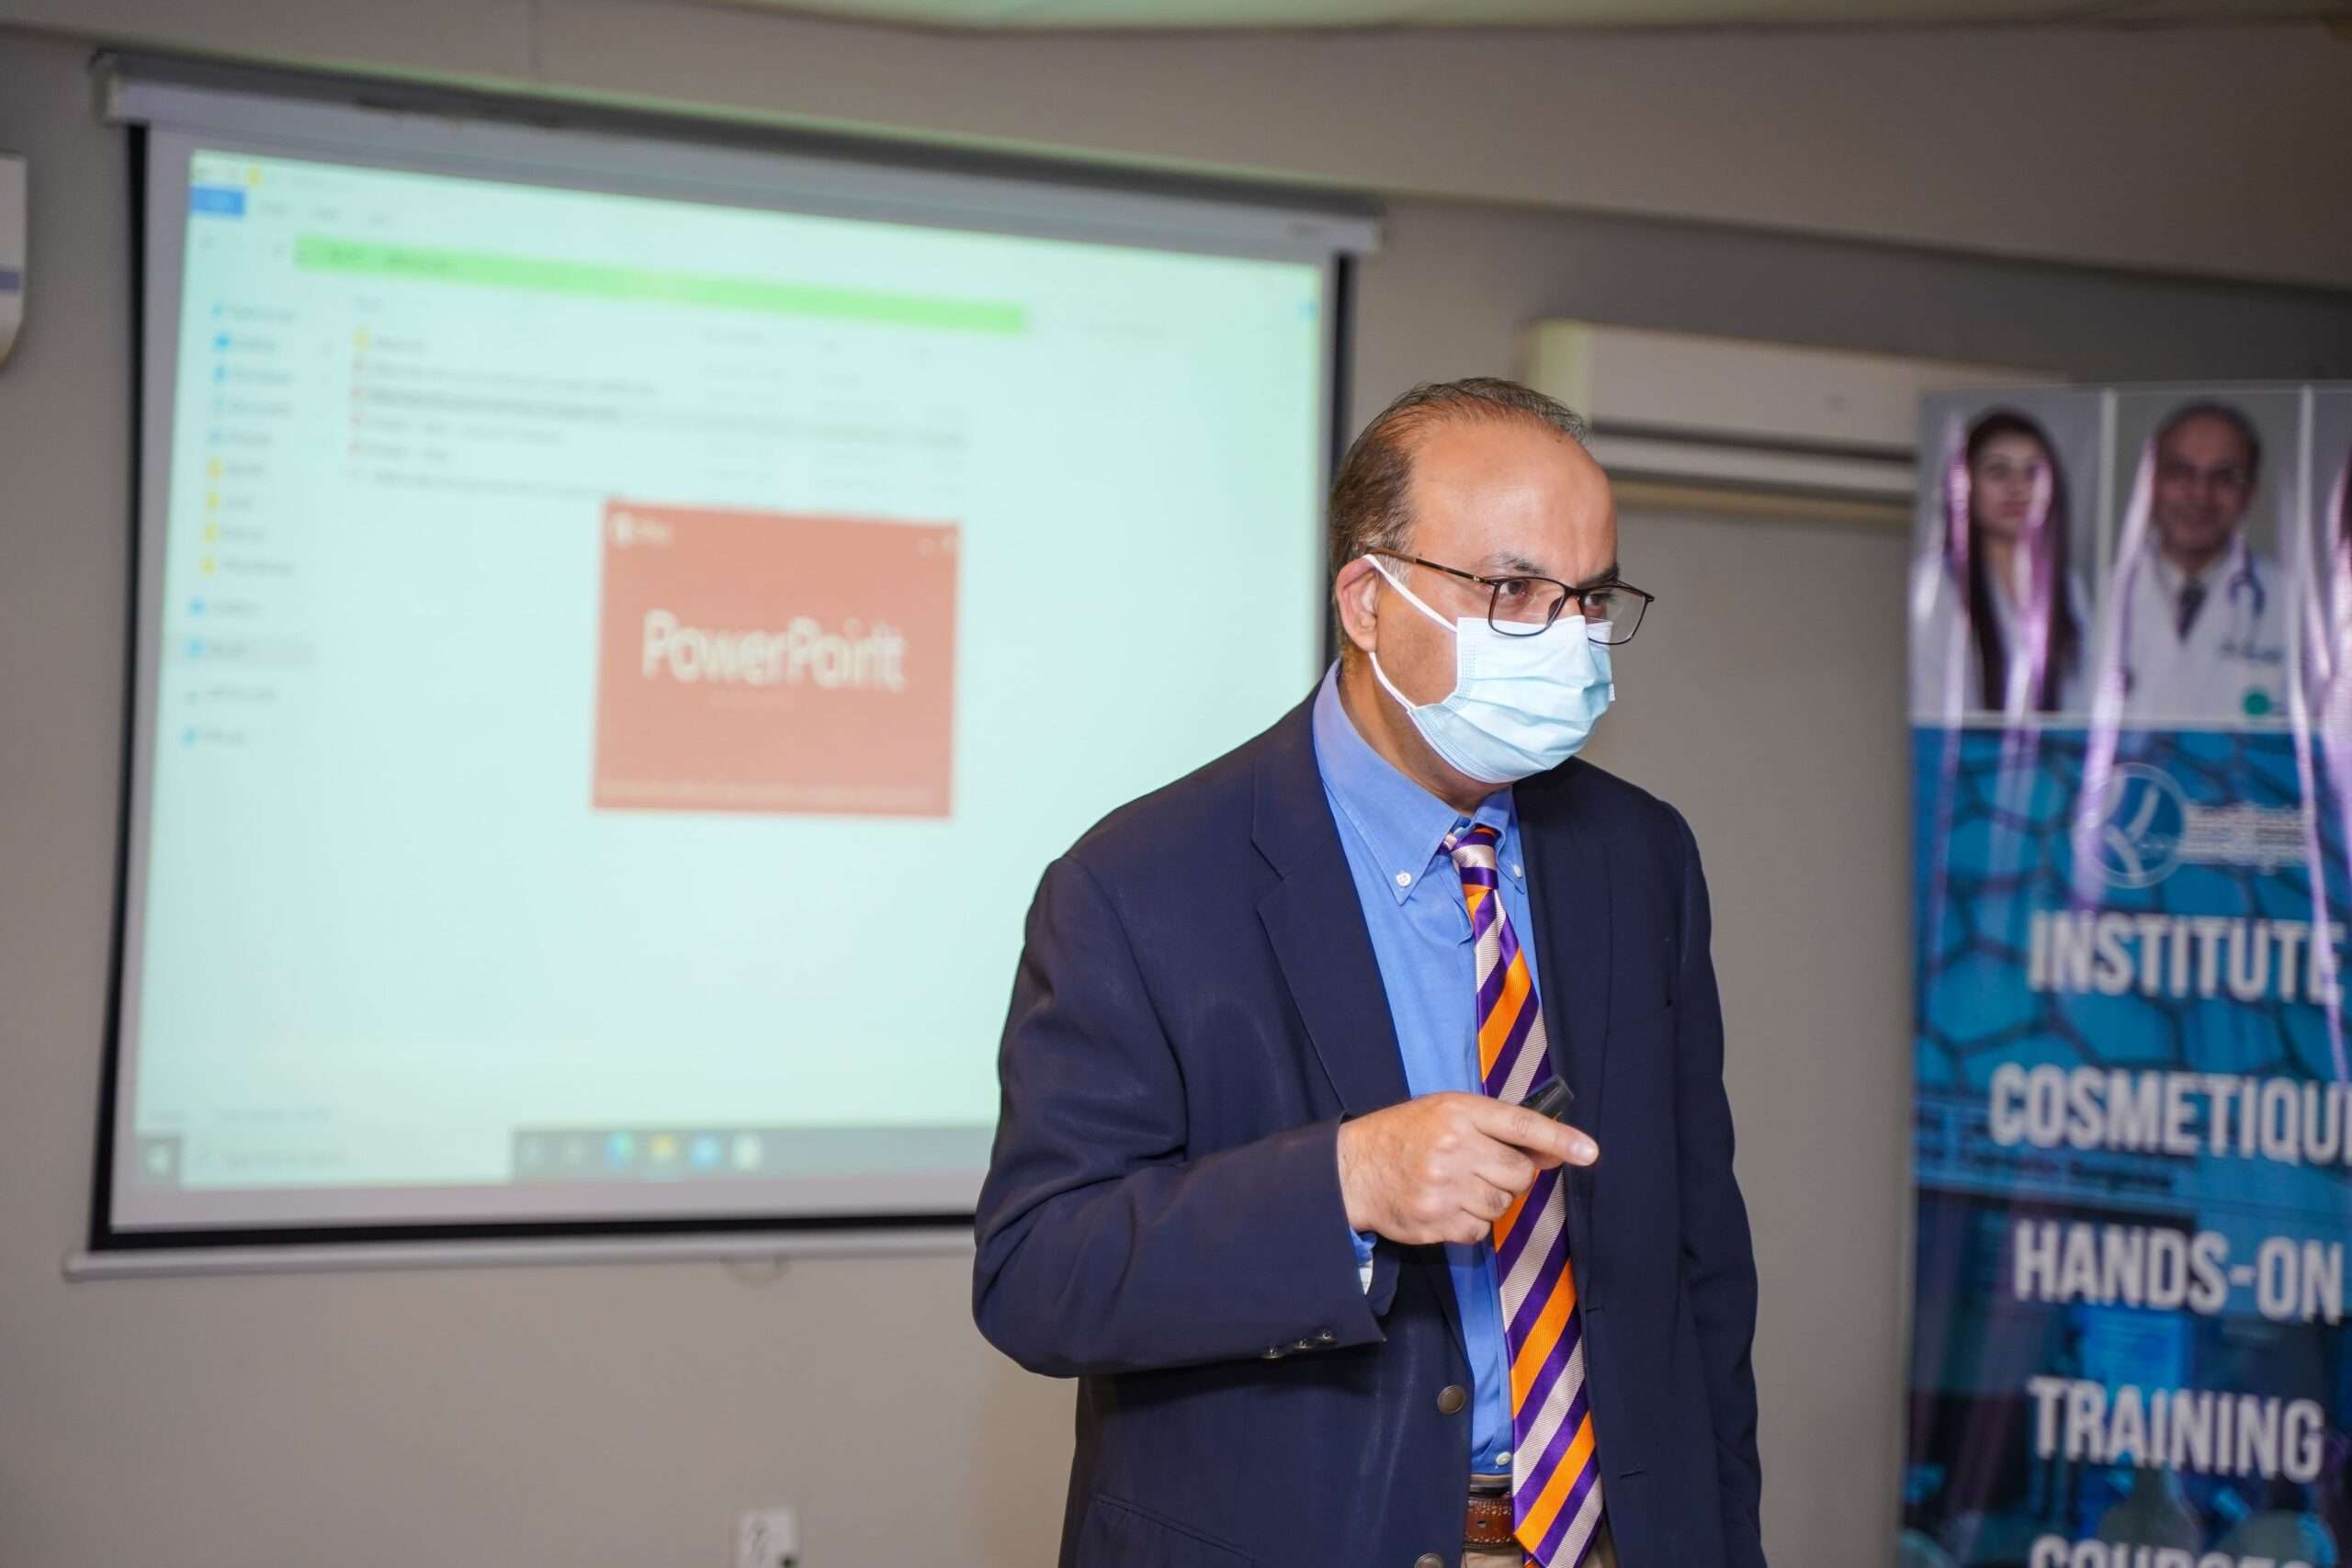 Prof. Dr. Azim Jahangir Khan at Cosmetique